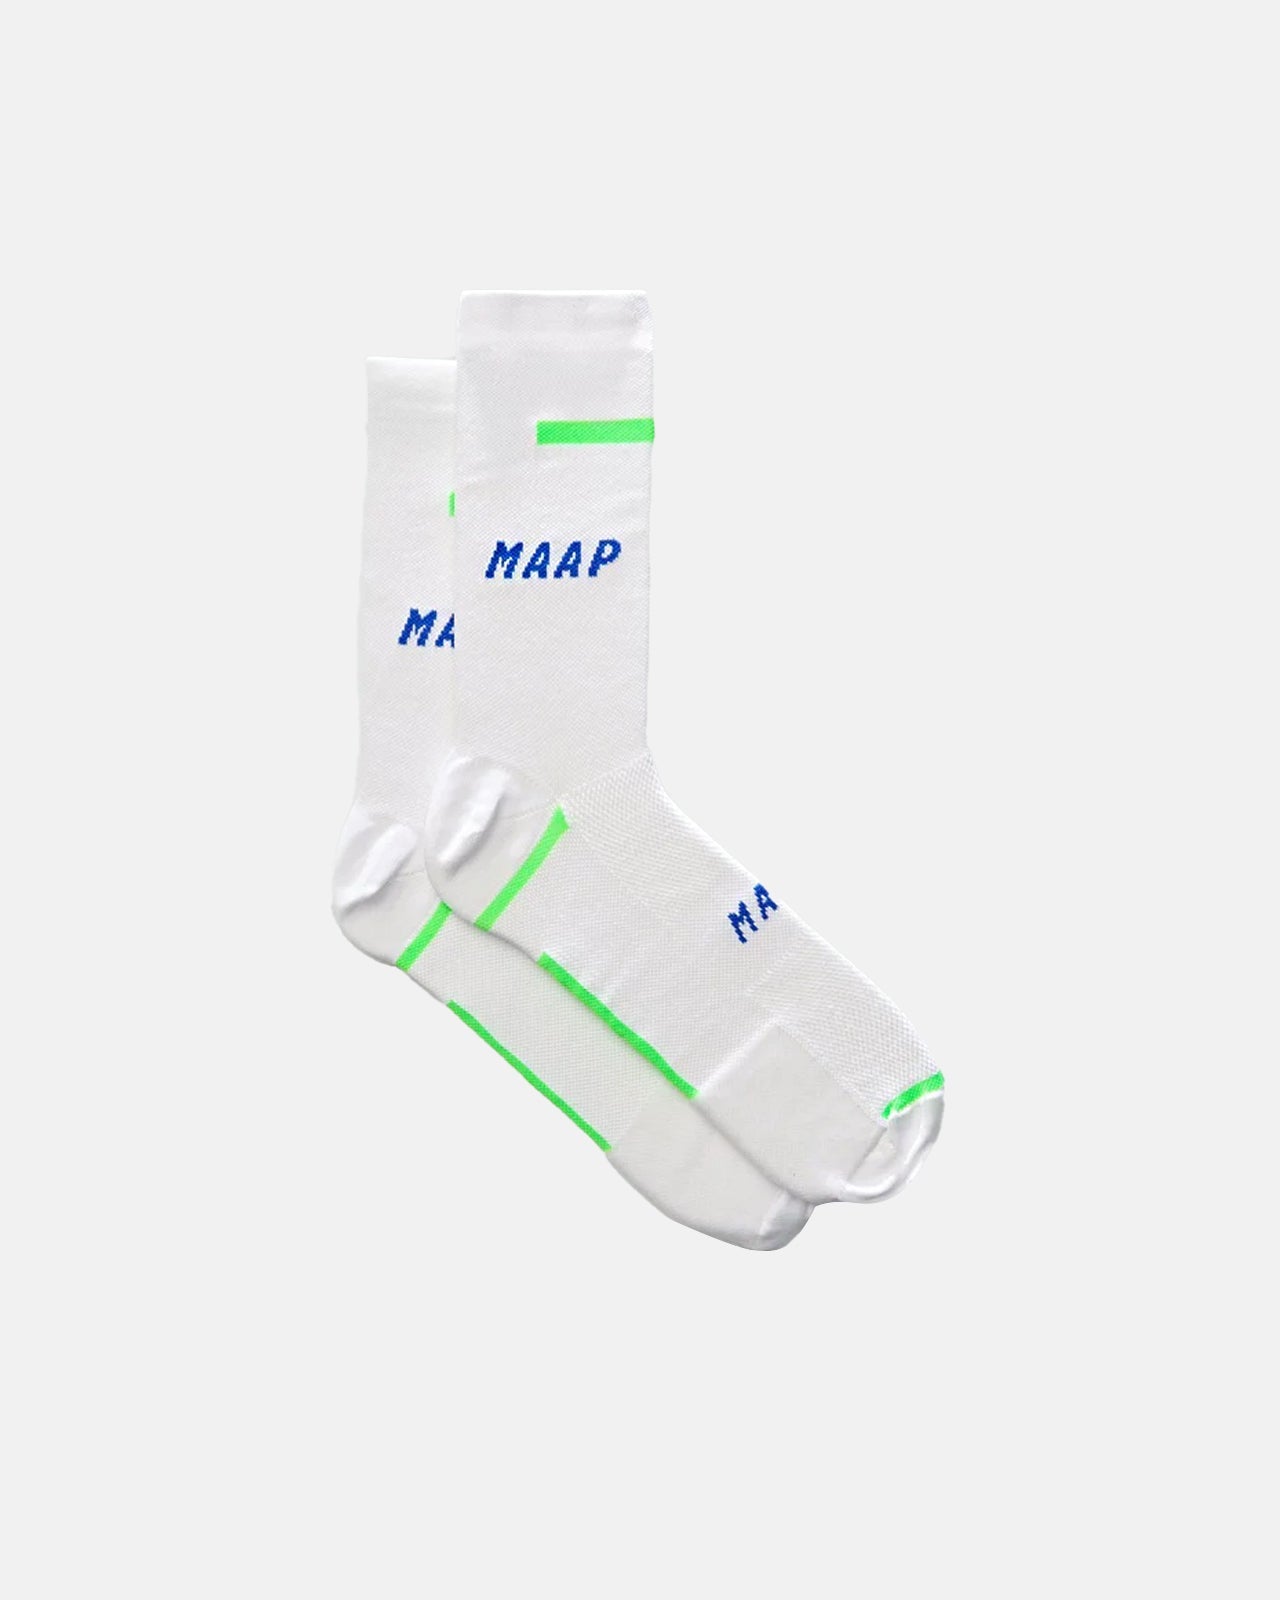 MAAP Alpha Sock - White